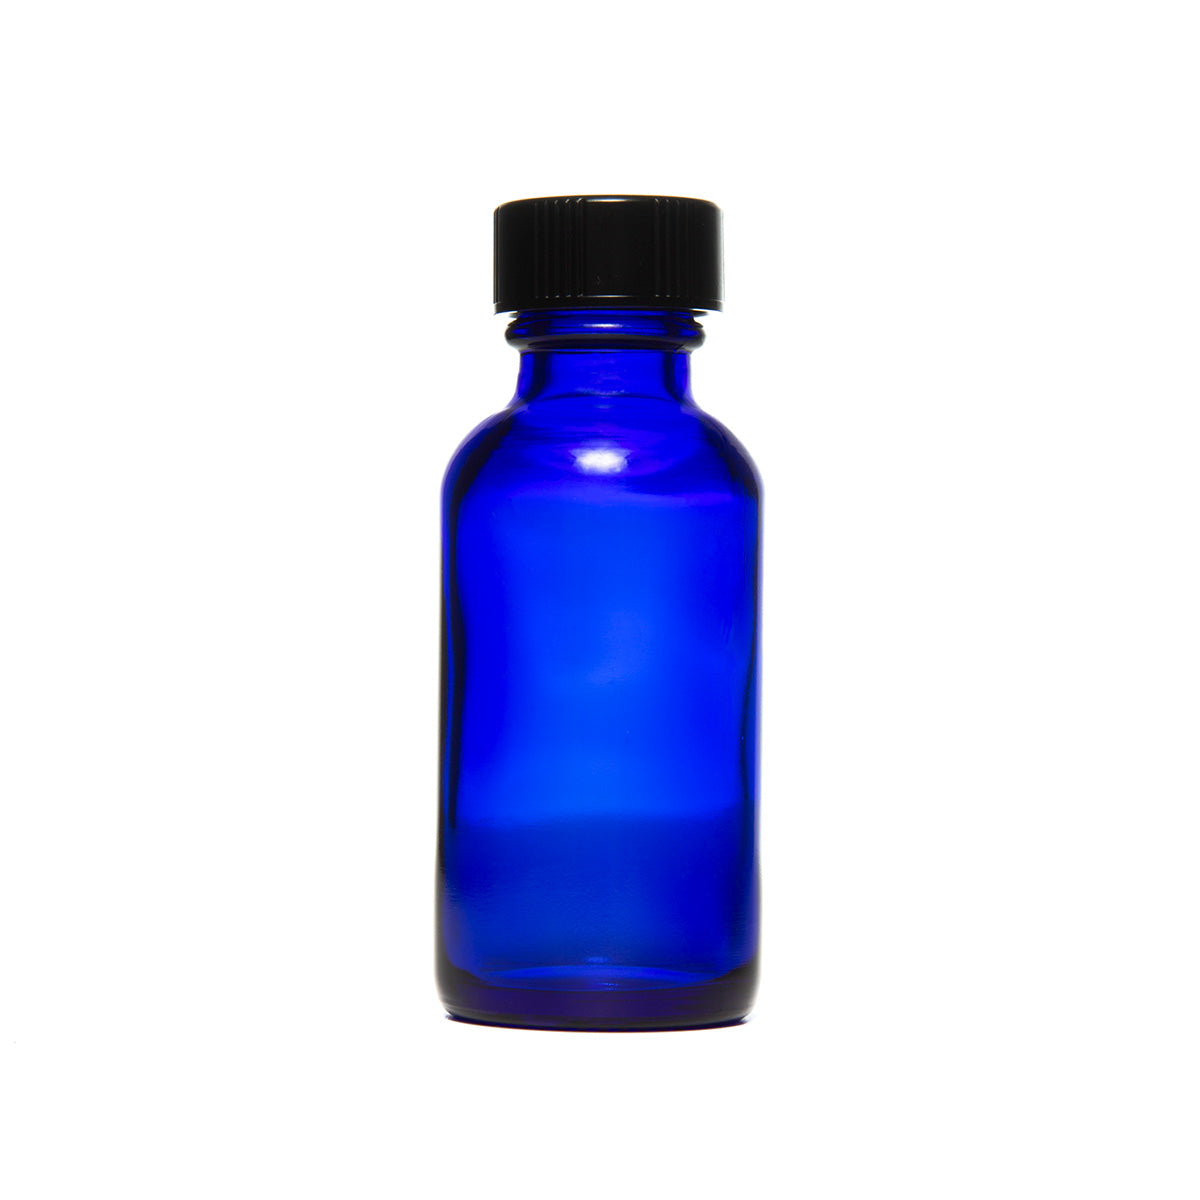 Blue Bottle 1 oz